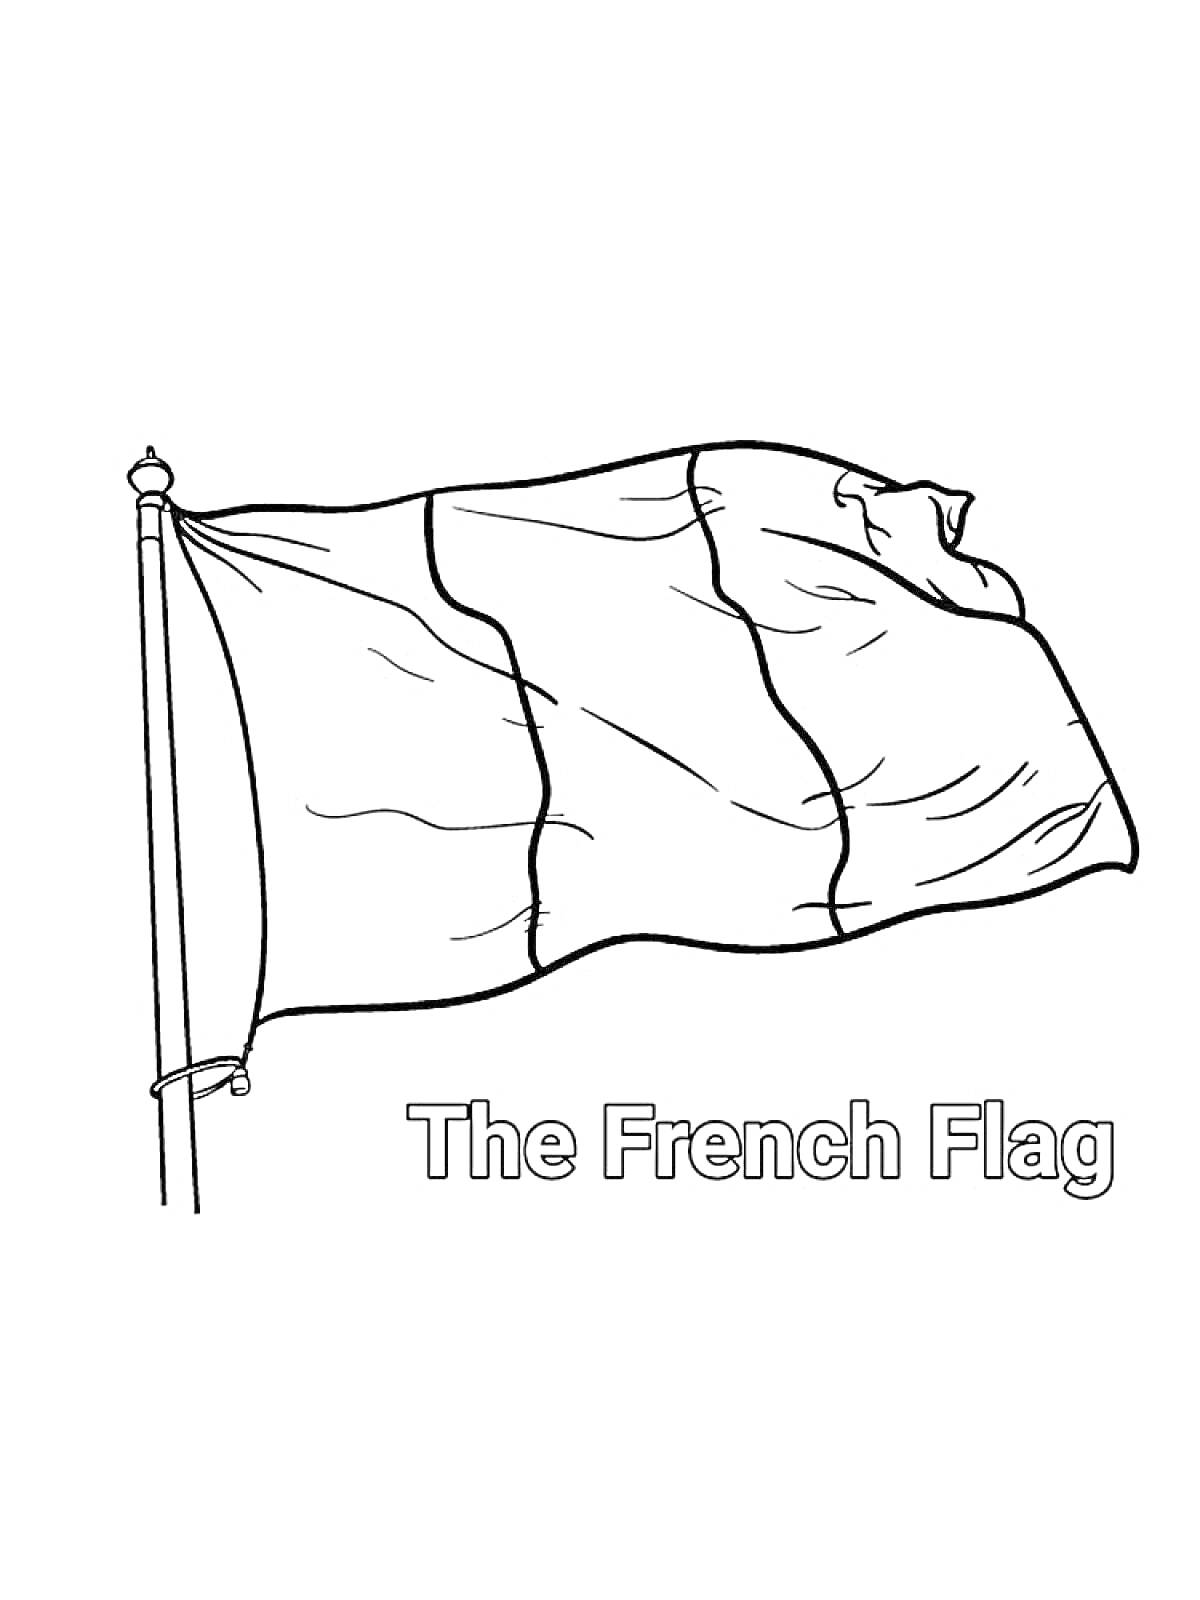 Раскраска Флаг Франции, развивающийся на флагштоке с надписью 